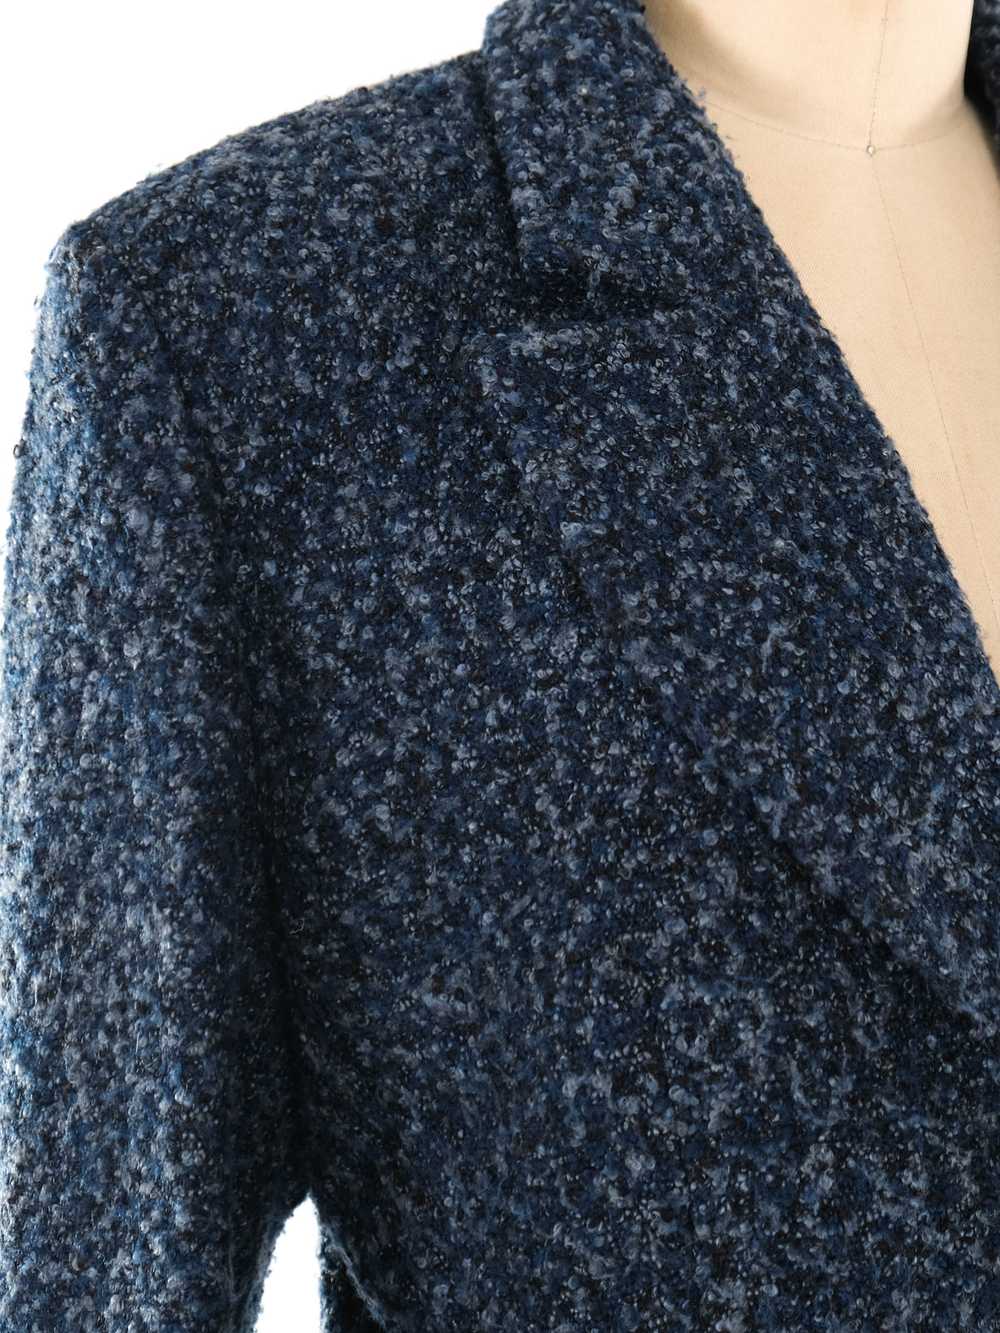 Yves Saint Laurent Boucle Tweed Suit - image 2